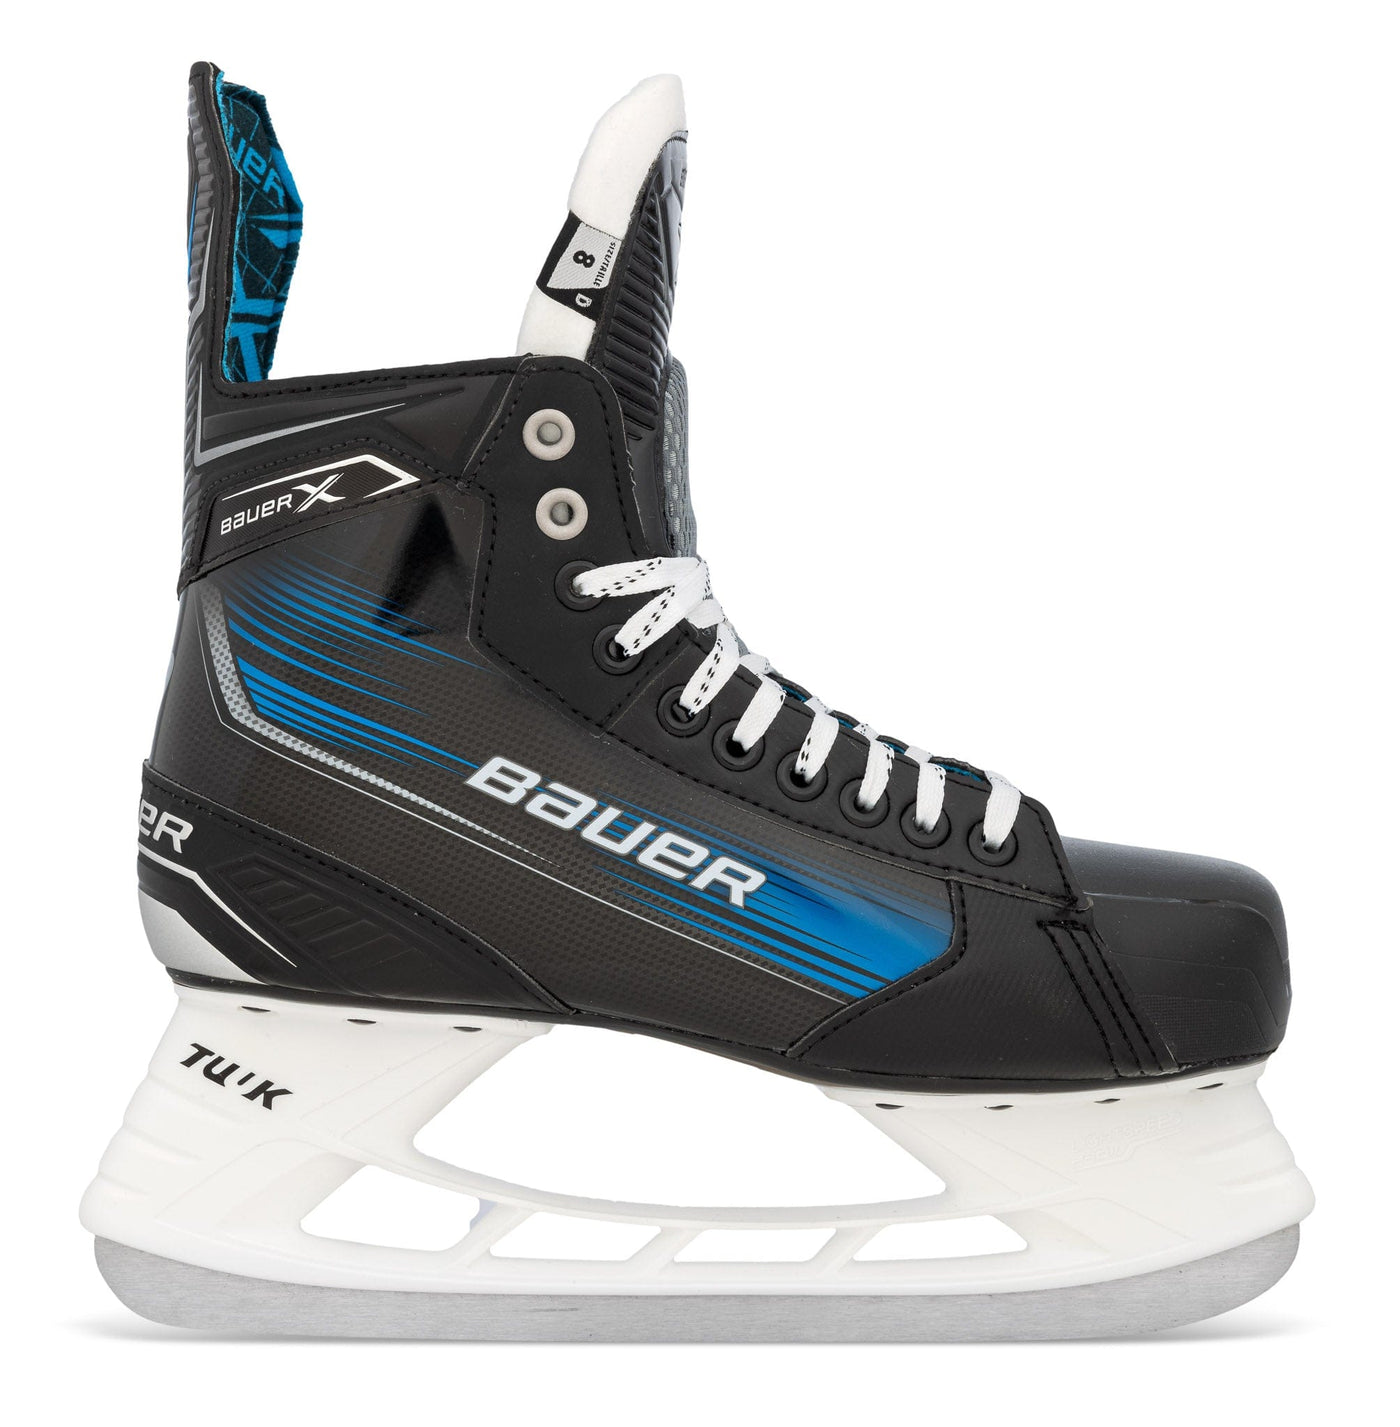 Bauer X Series Intermediate Hockey Skates - The Hockey Shop Source For Sports